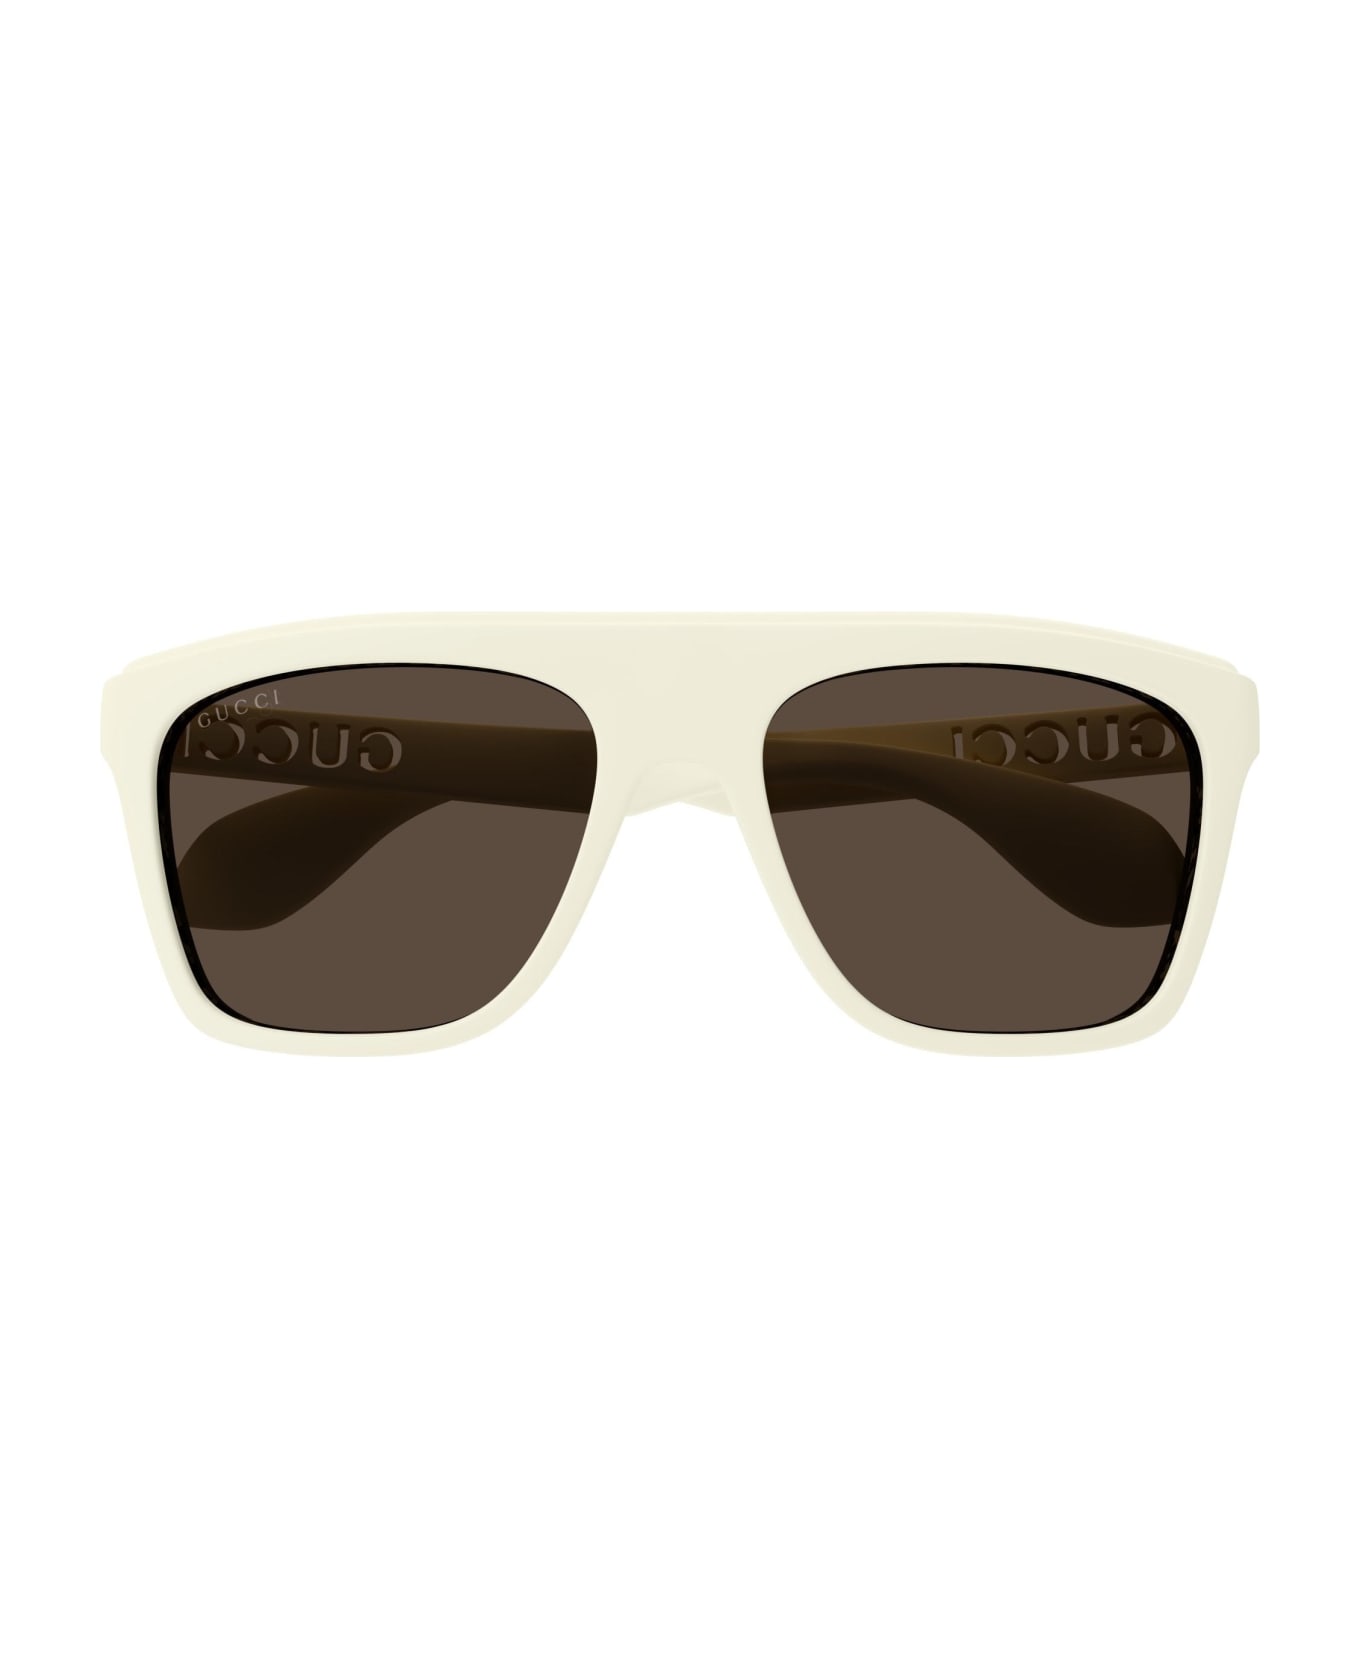 Gucci Eyewear Sunglasses - Avorio/Marrone